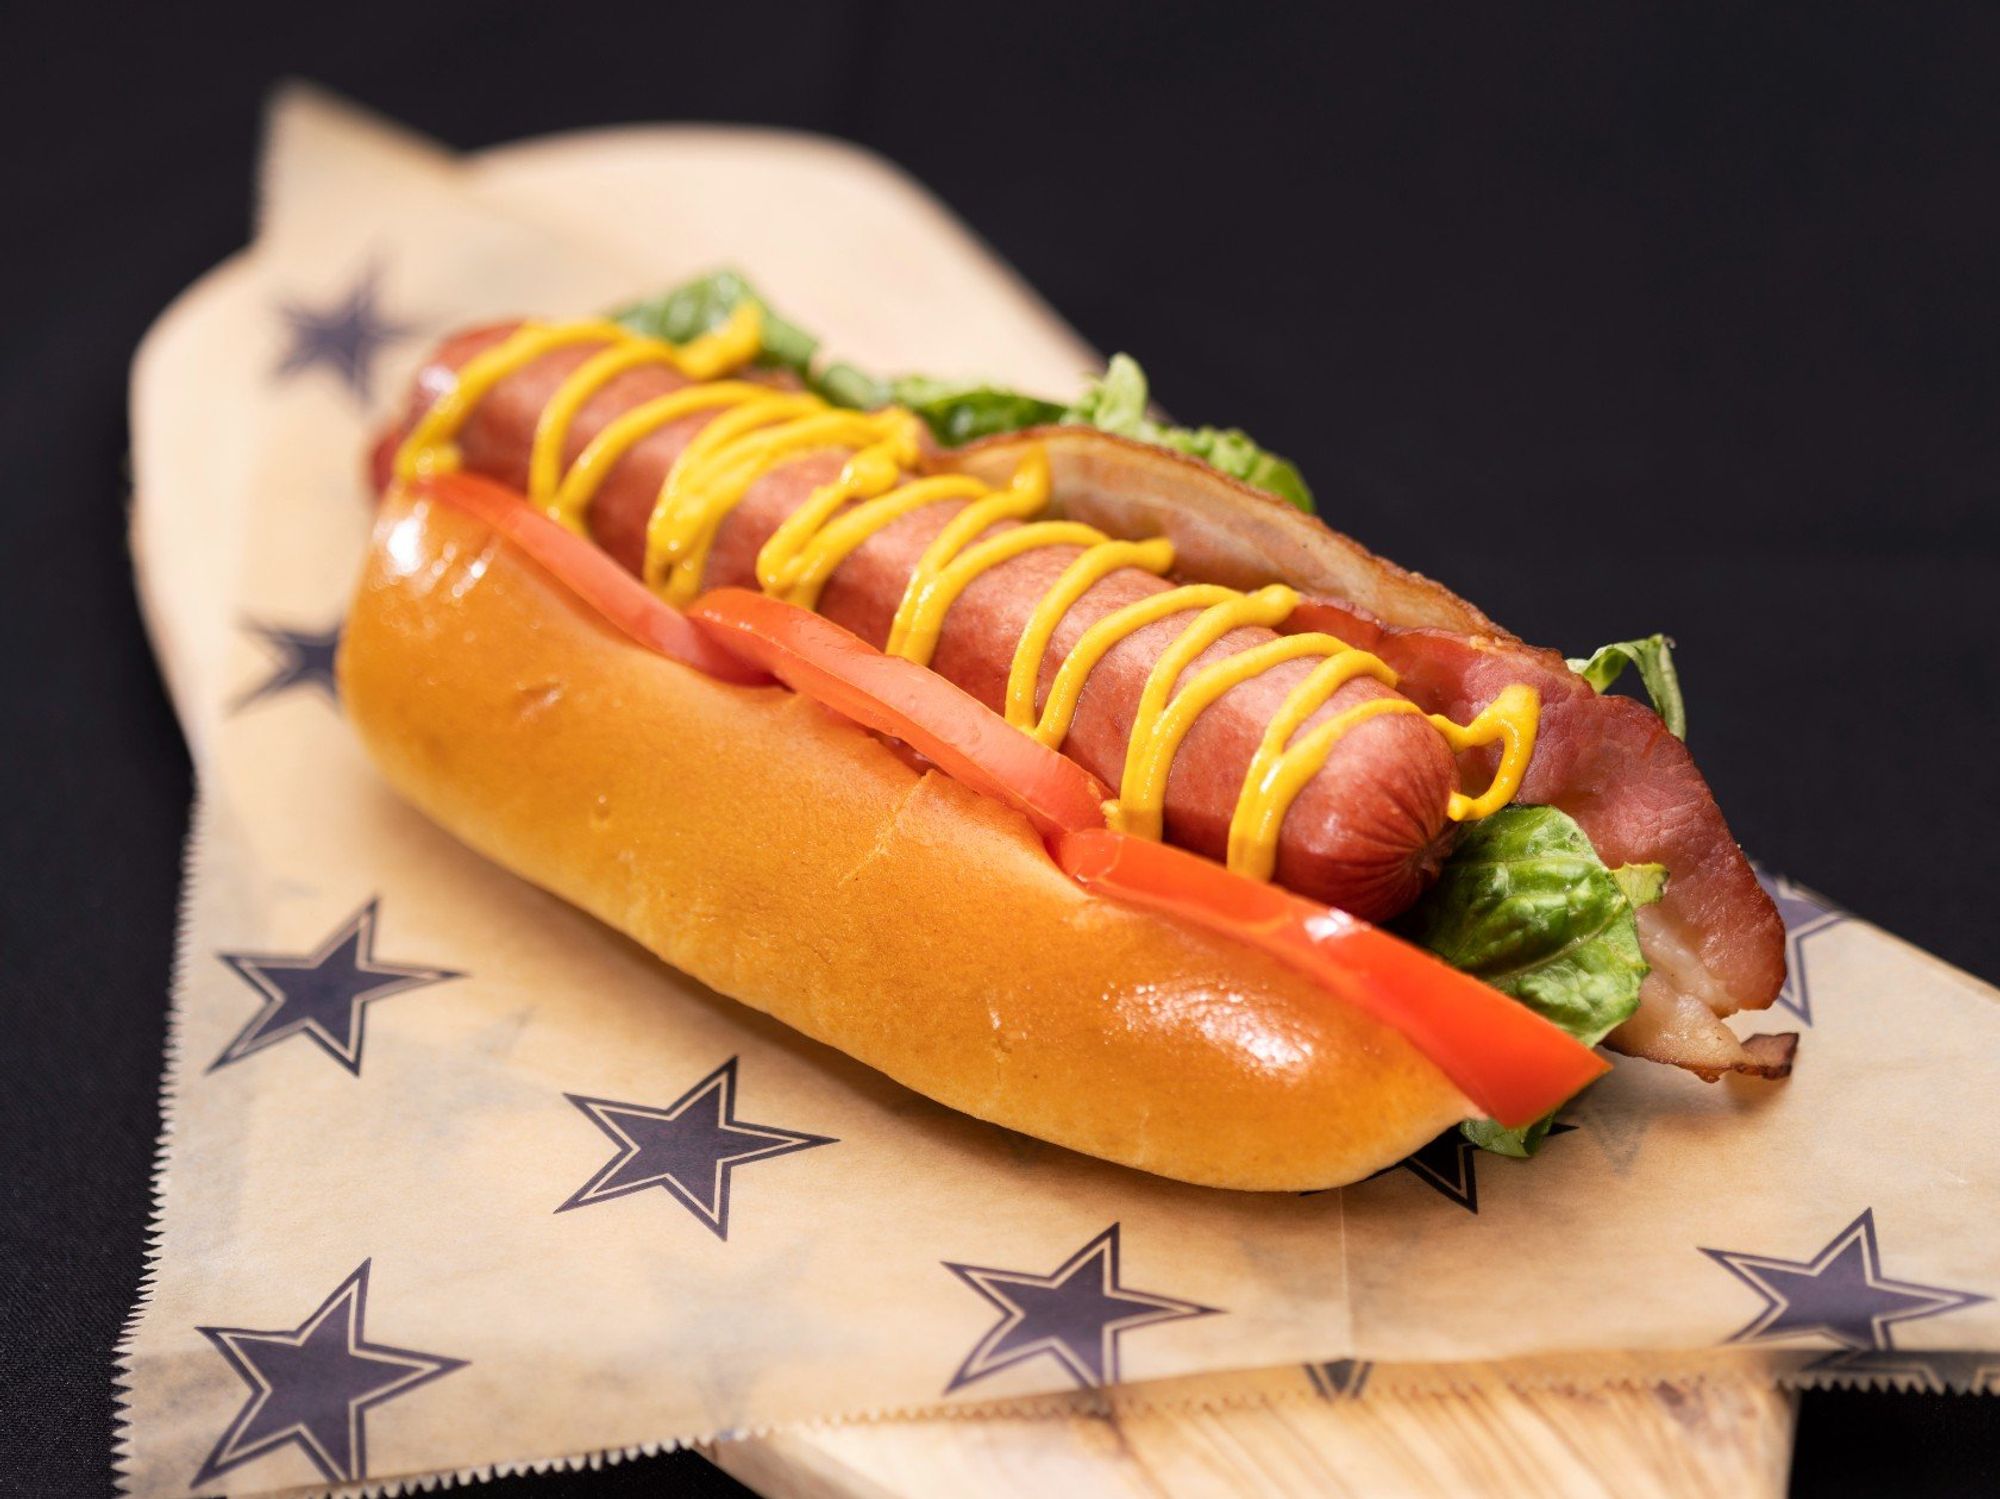 Houston Hot Dog Company: Best Hot Dog Near Me